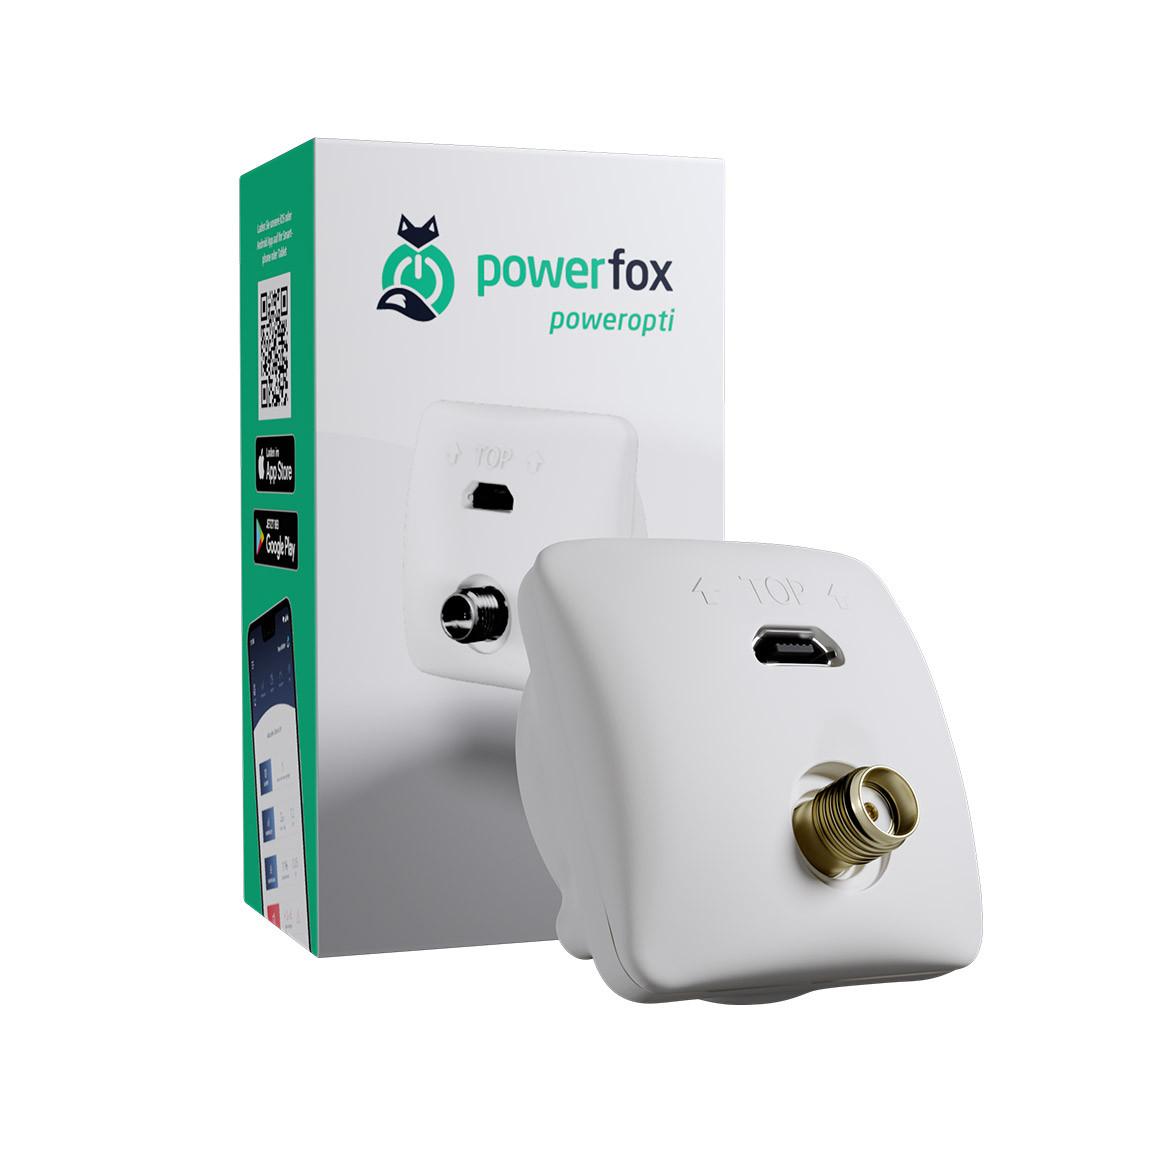 powerfox poweropti mit IR-Diode - Verpackung